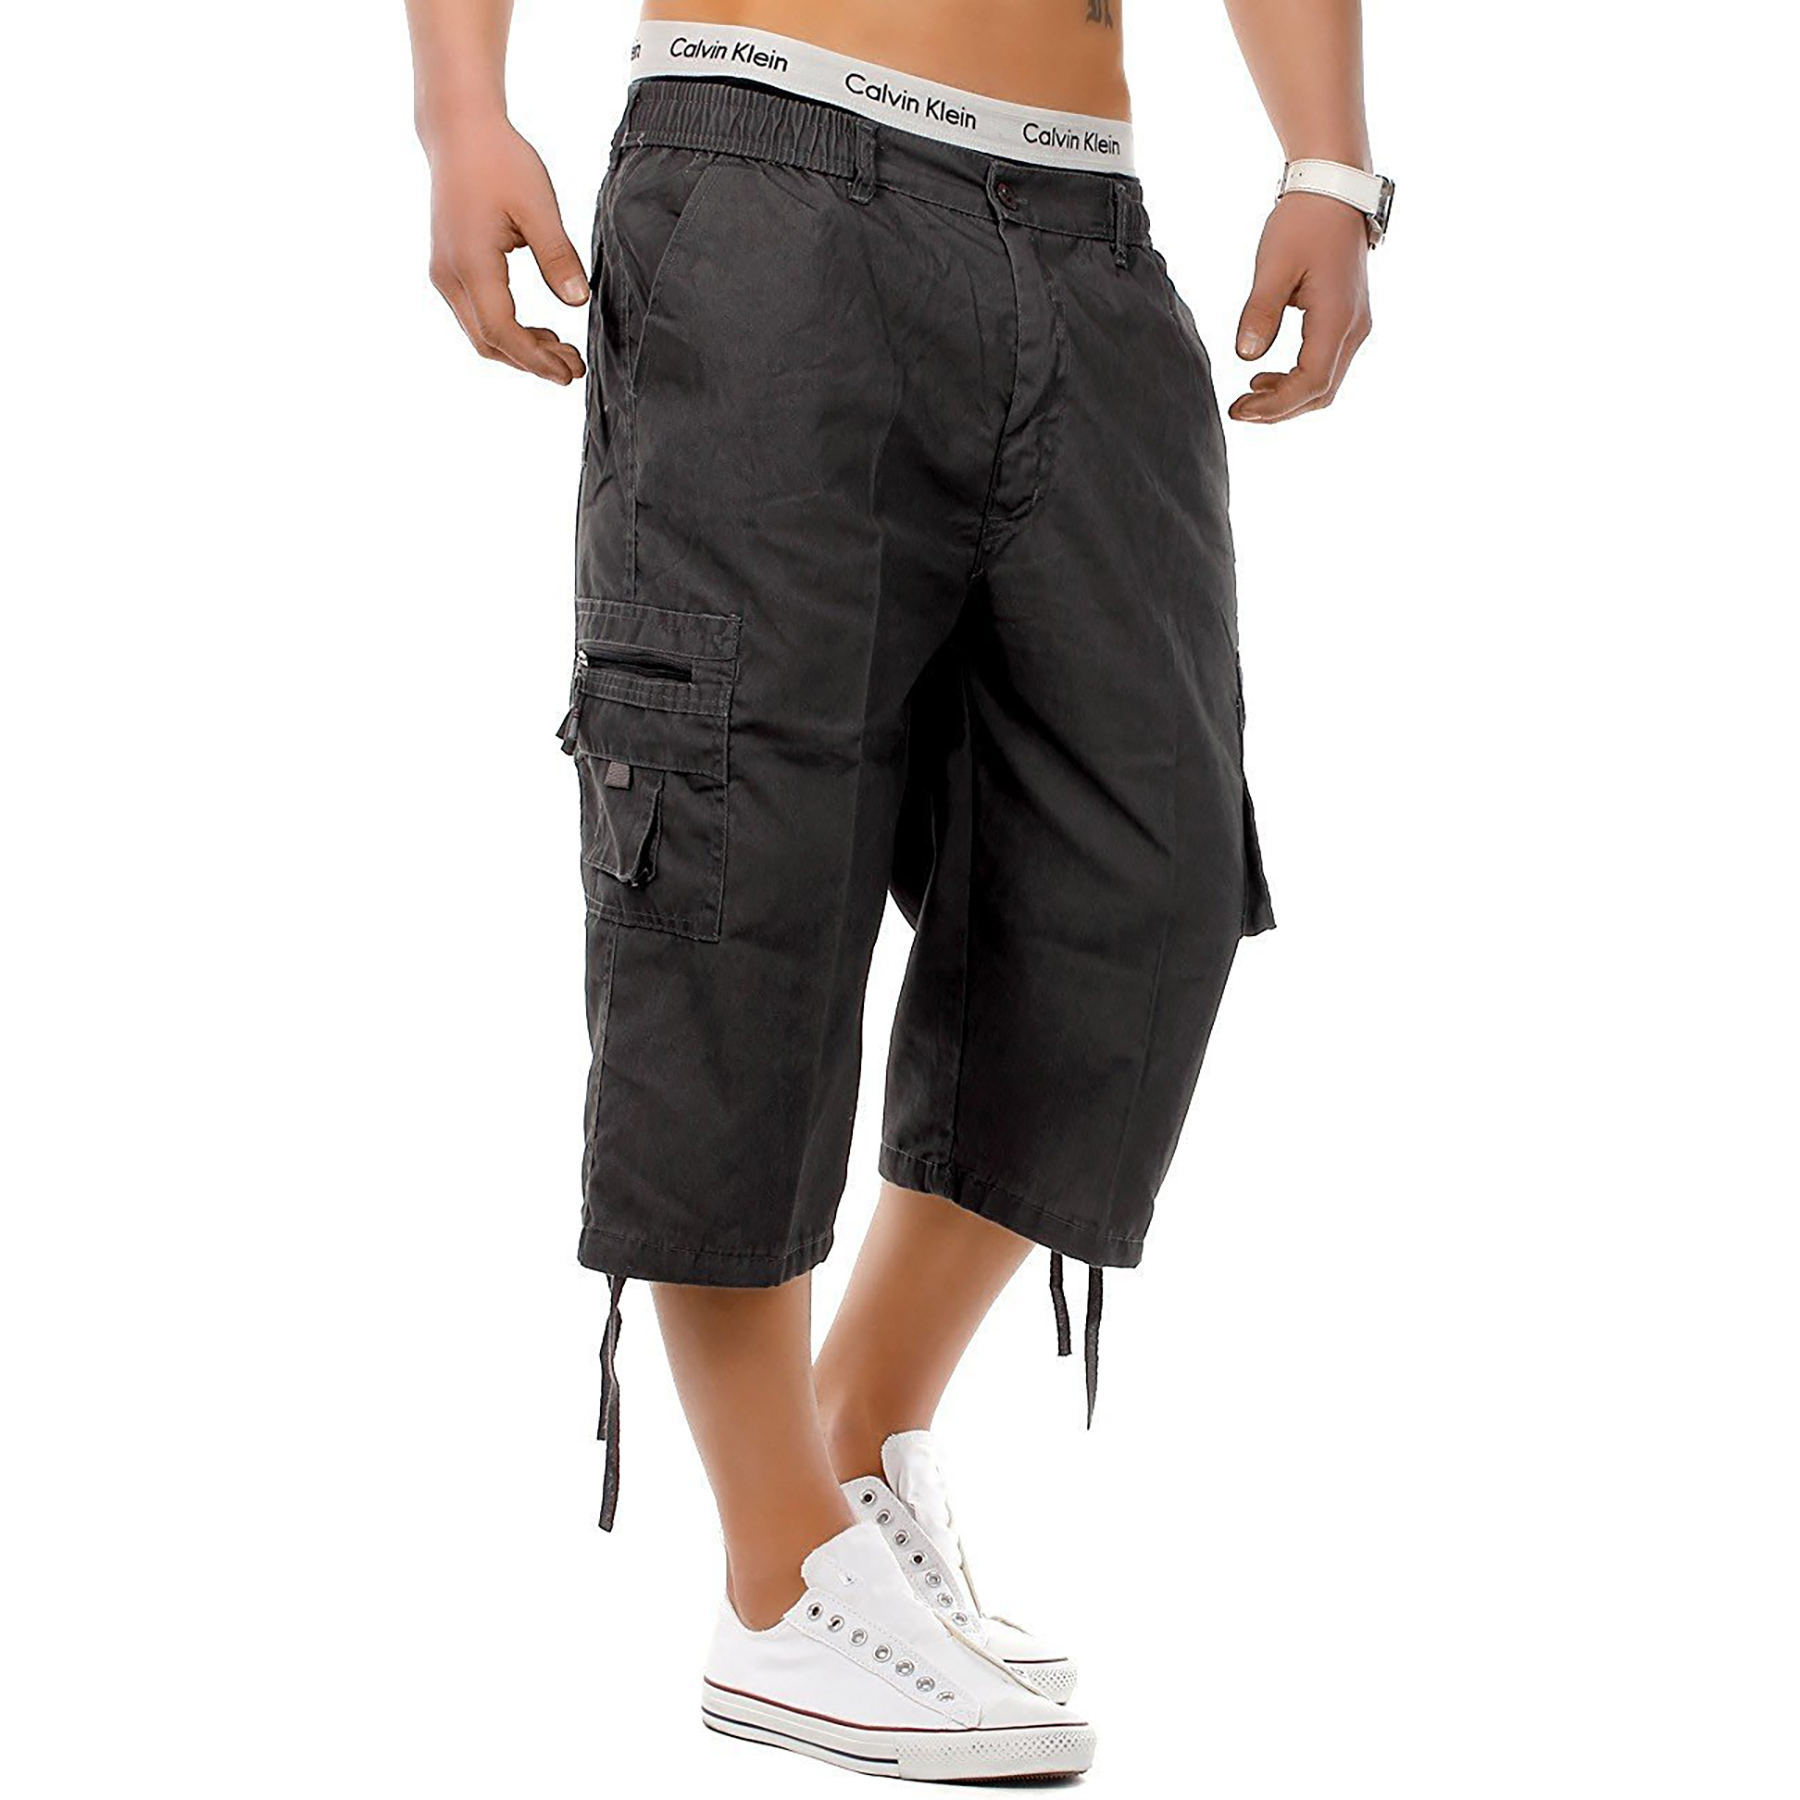 Cardigo Men Shorts New Elasticated Waist Combat 3/4 Long Knee Length Short Pants